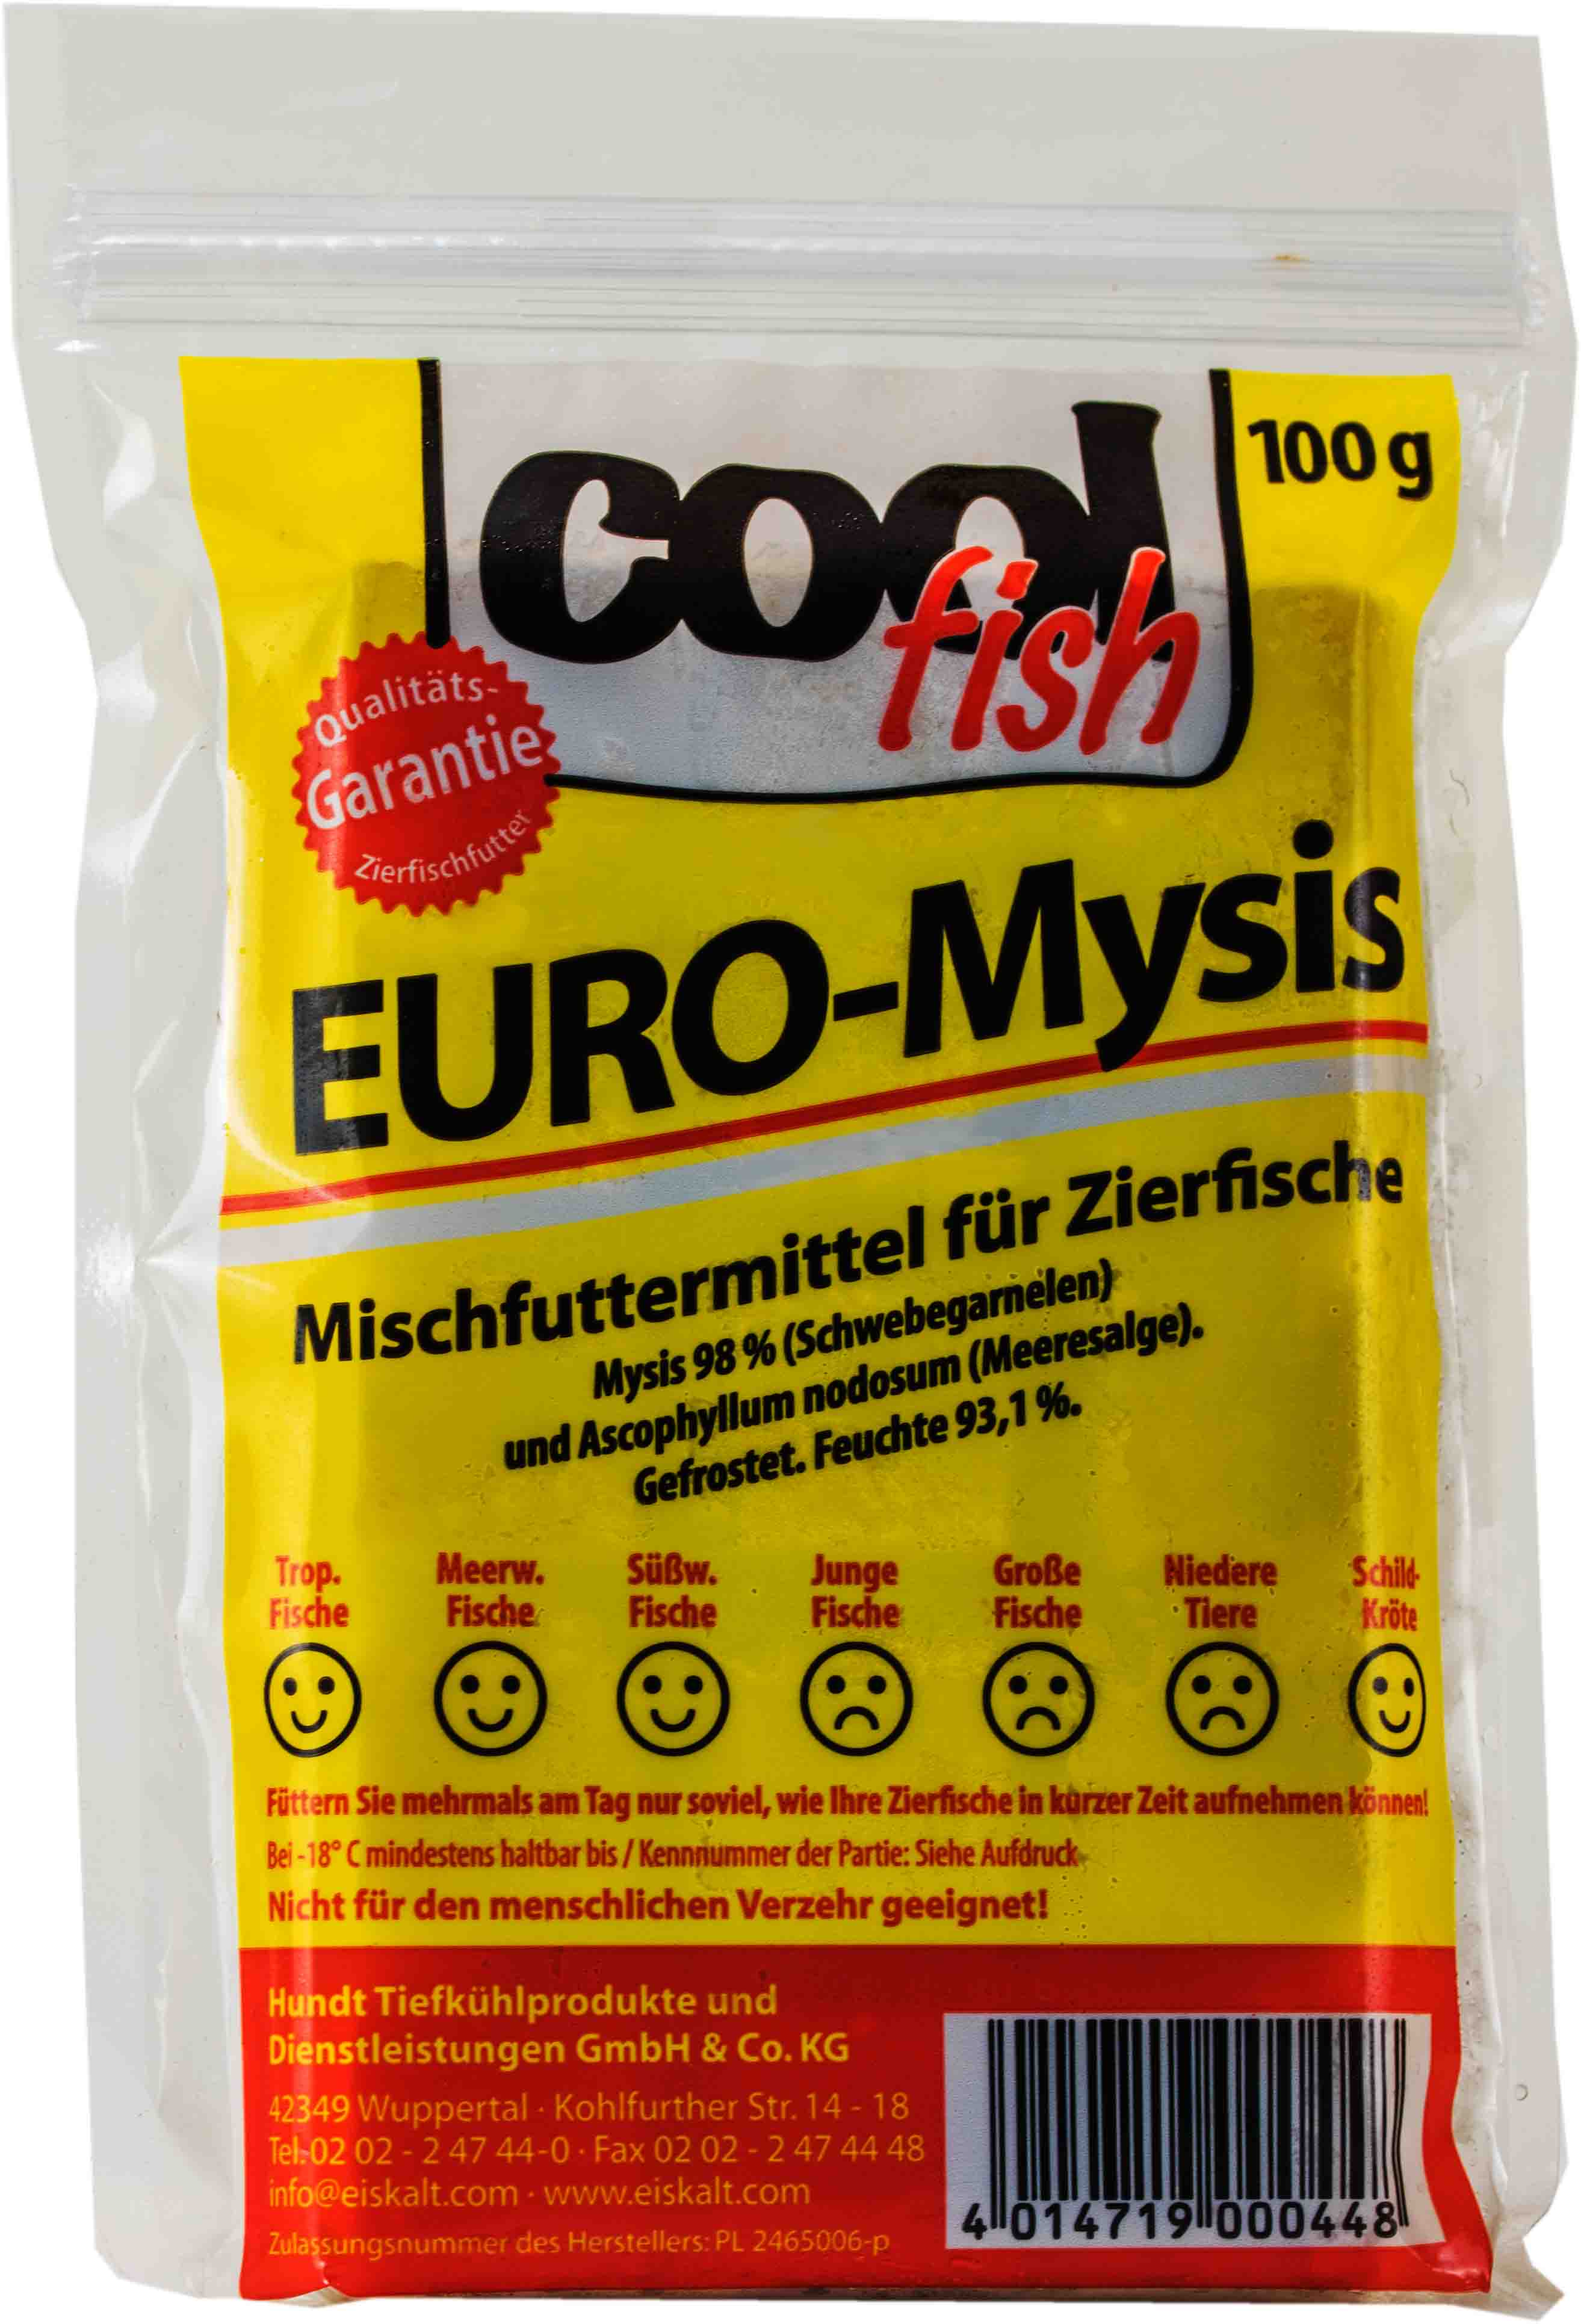 cool fish EURO-Mysis - Schoko